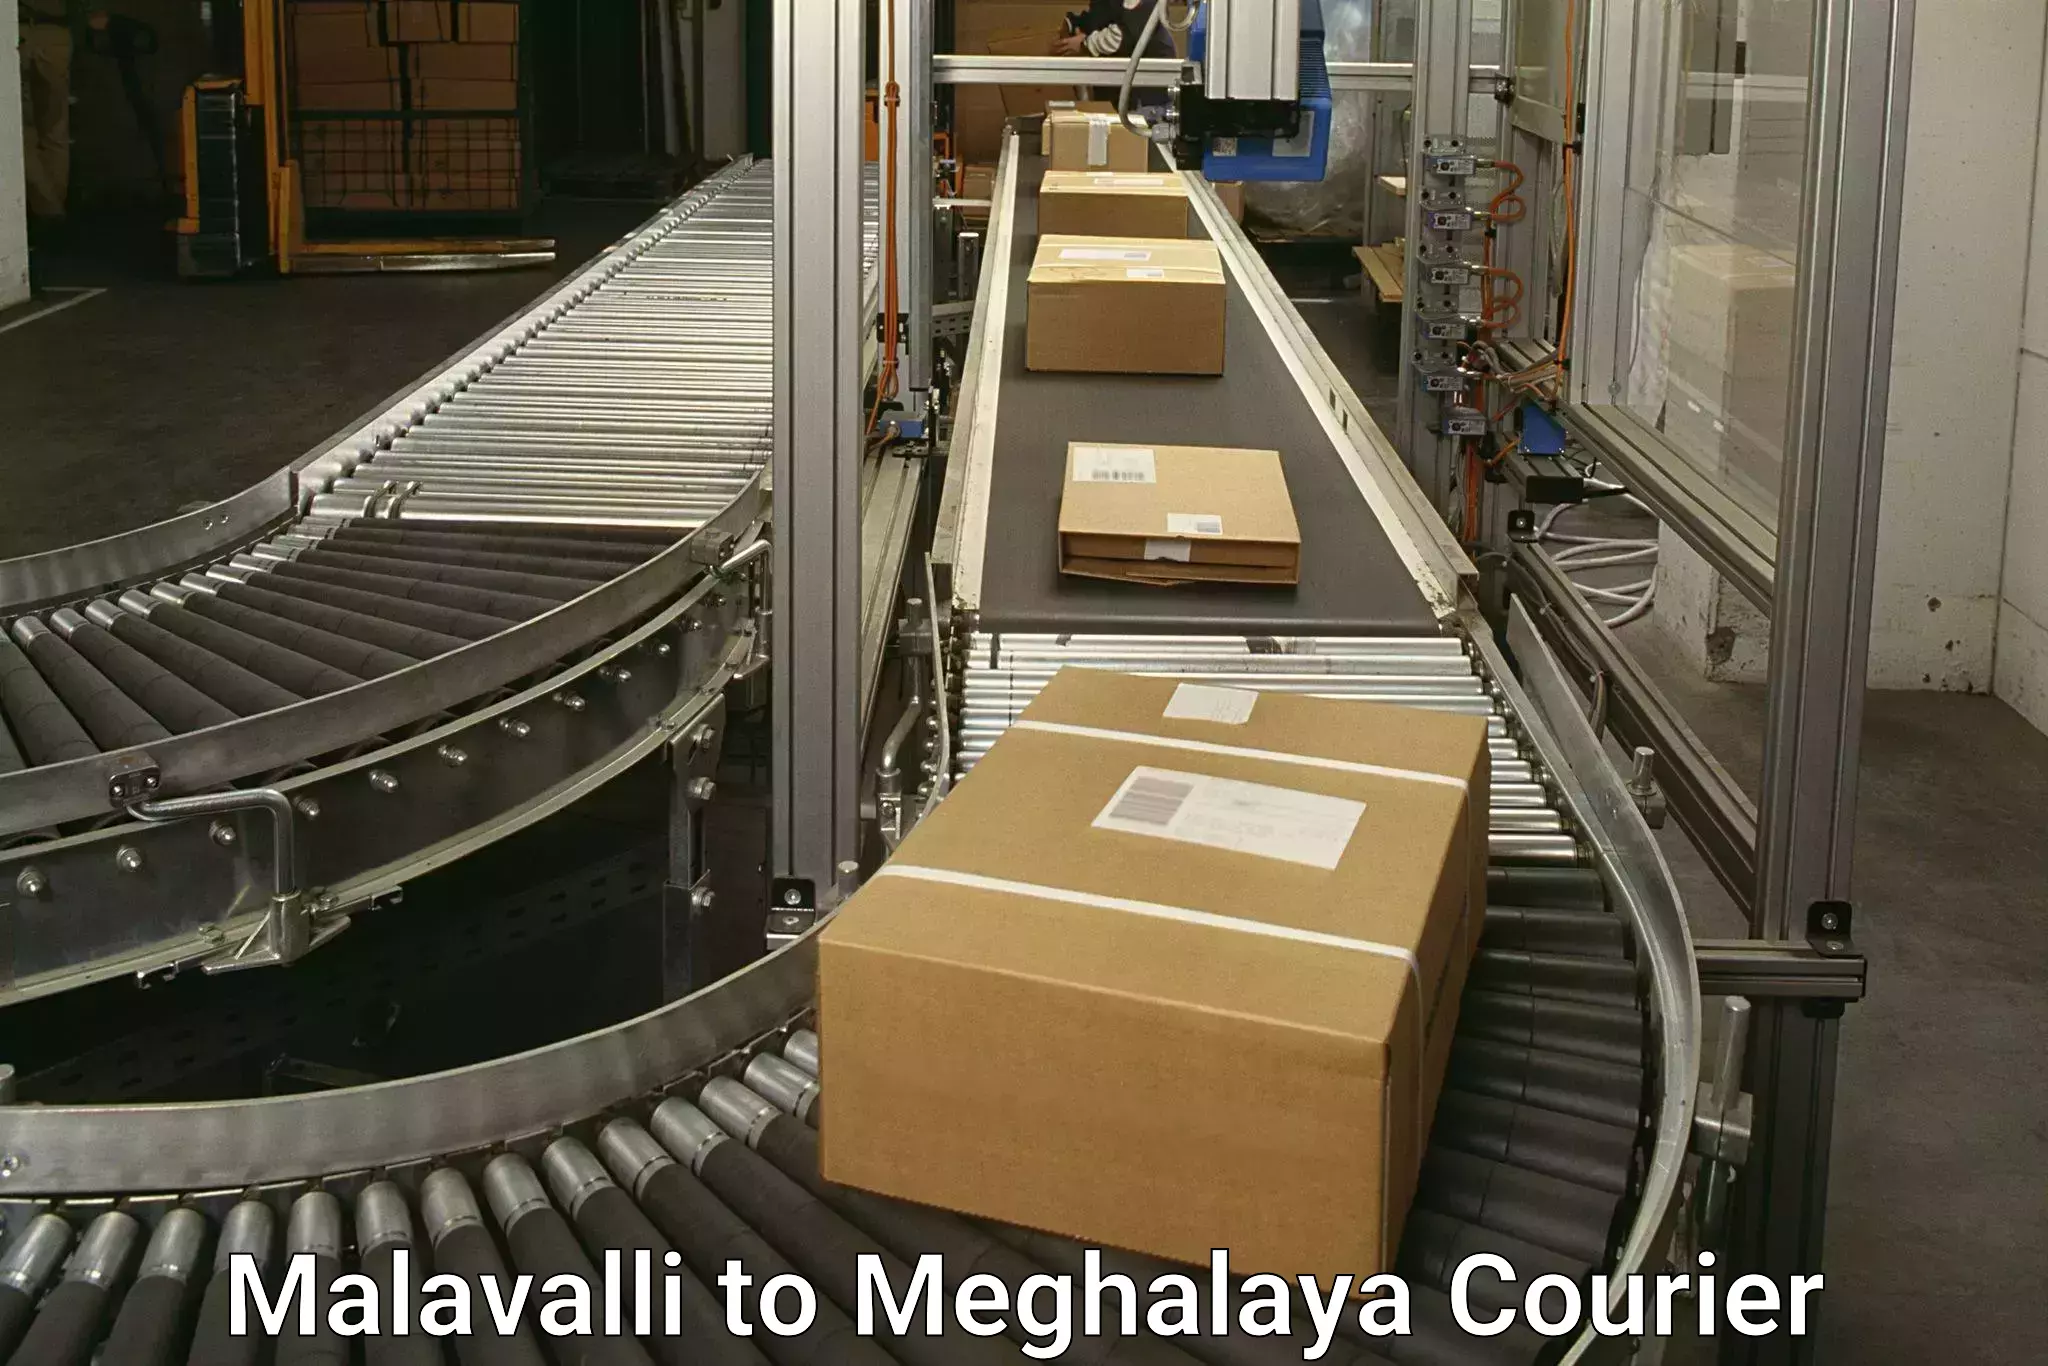 Courier service booking Malavalli to Meghalaya